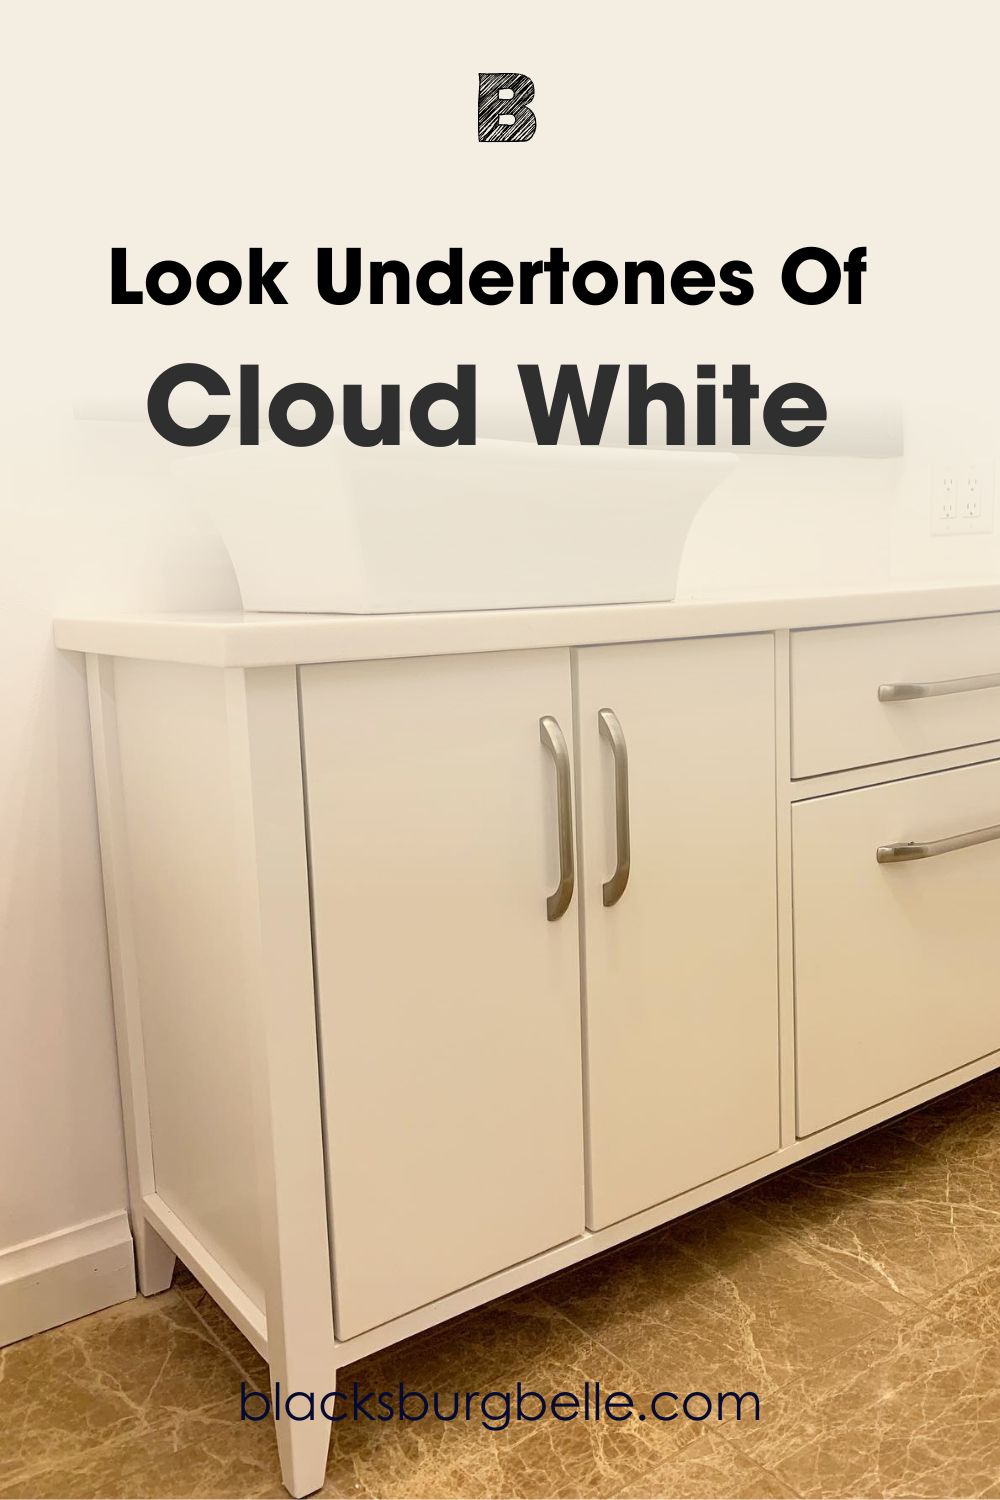 A Closer Look at Cloud White’s Undertones